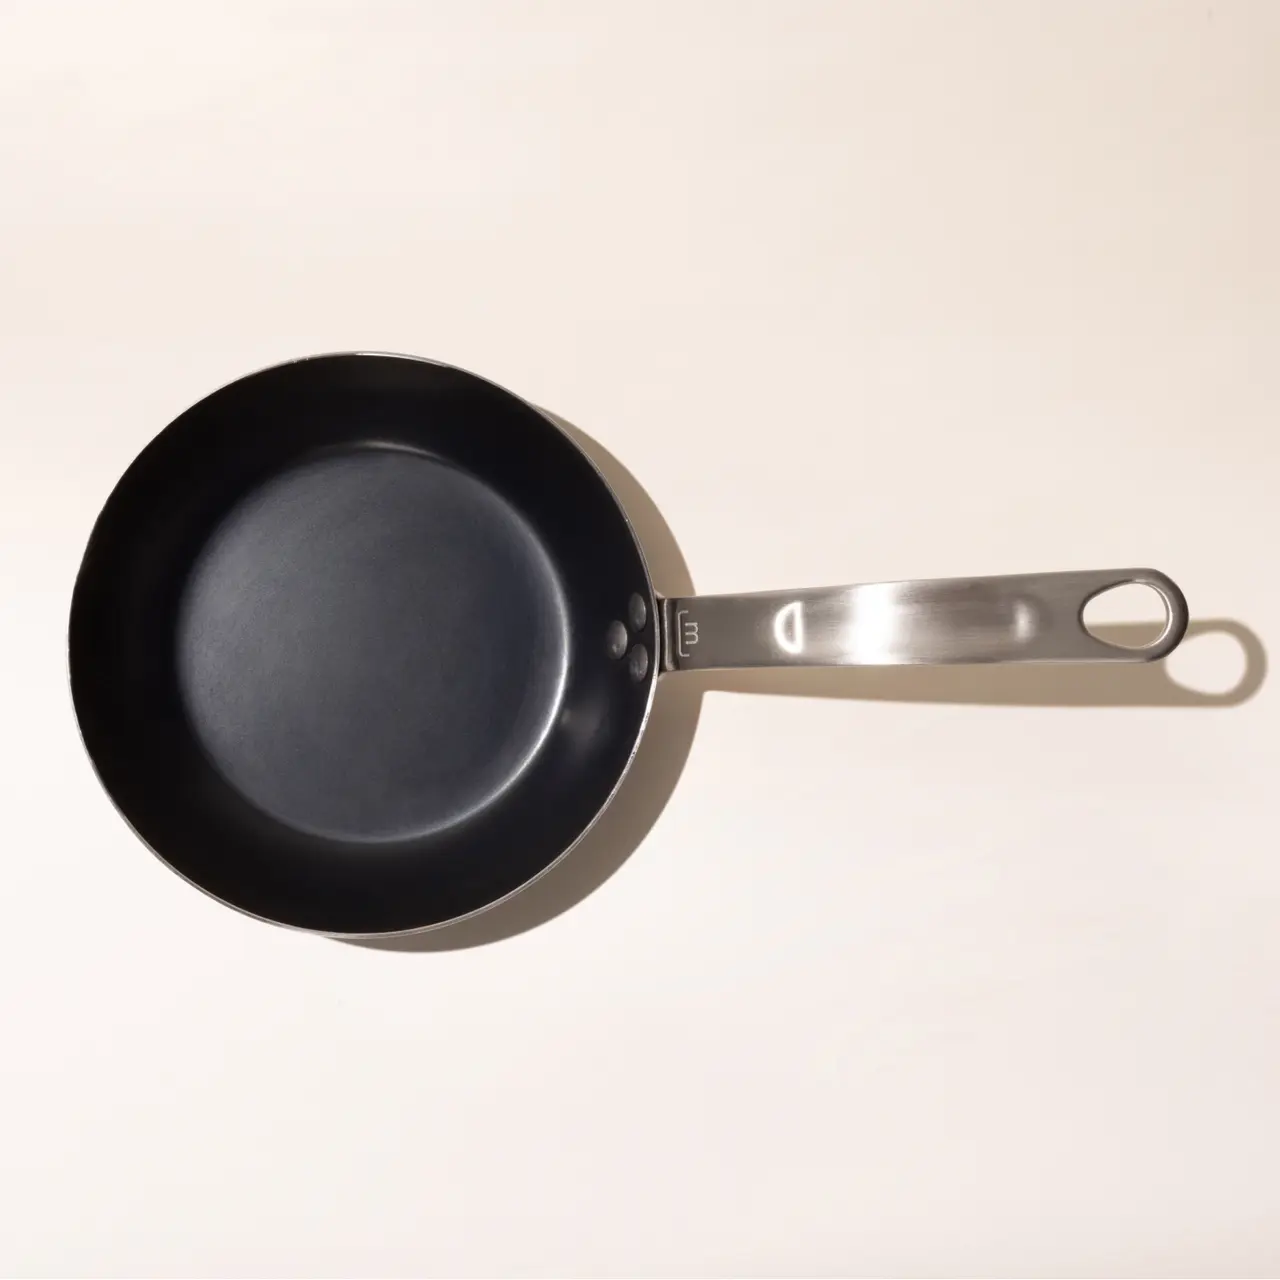 8 inch carbon frying pan top